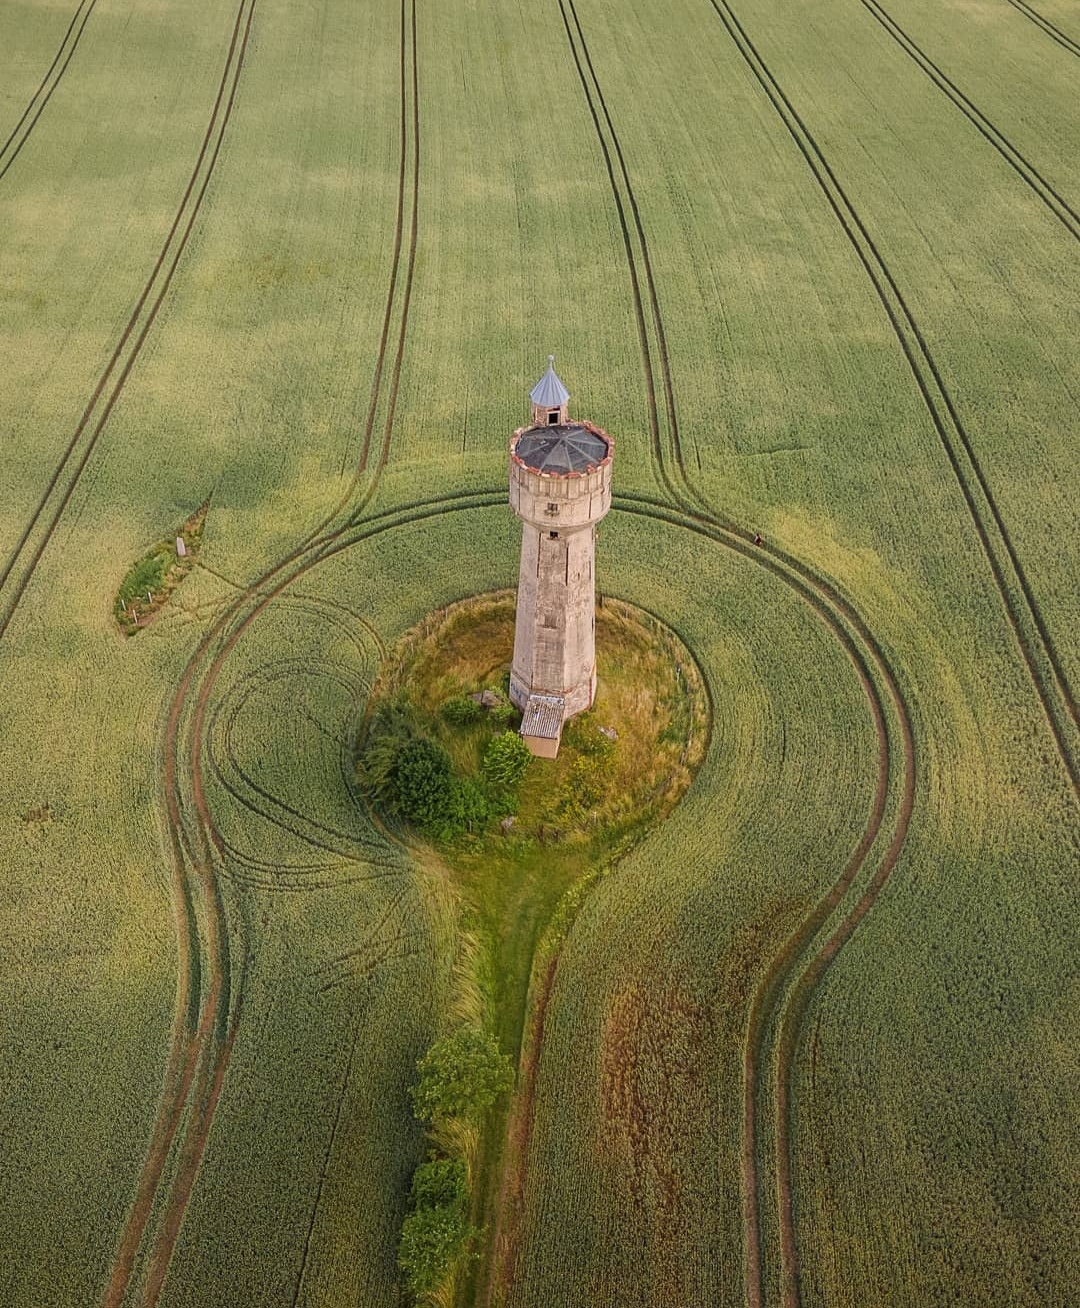 Wasserturm auf grünem Feld im Sommer